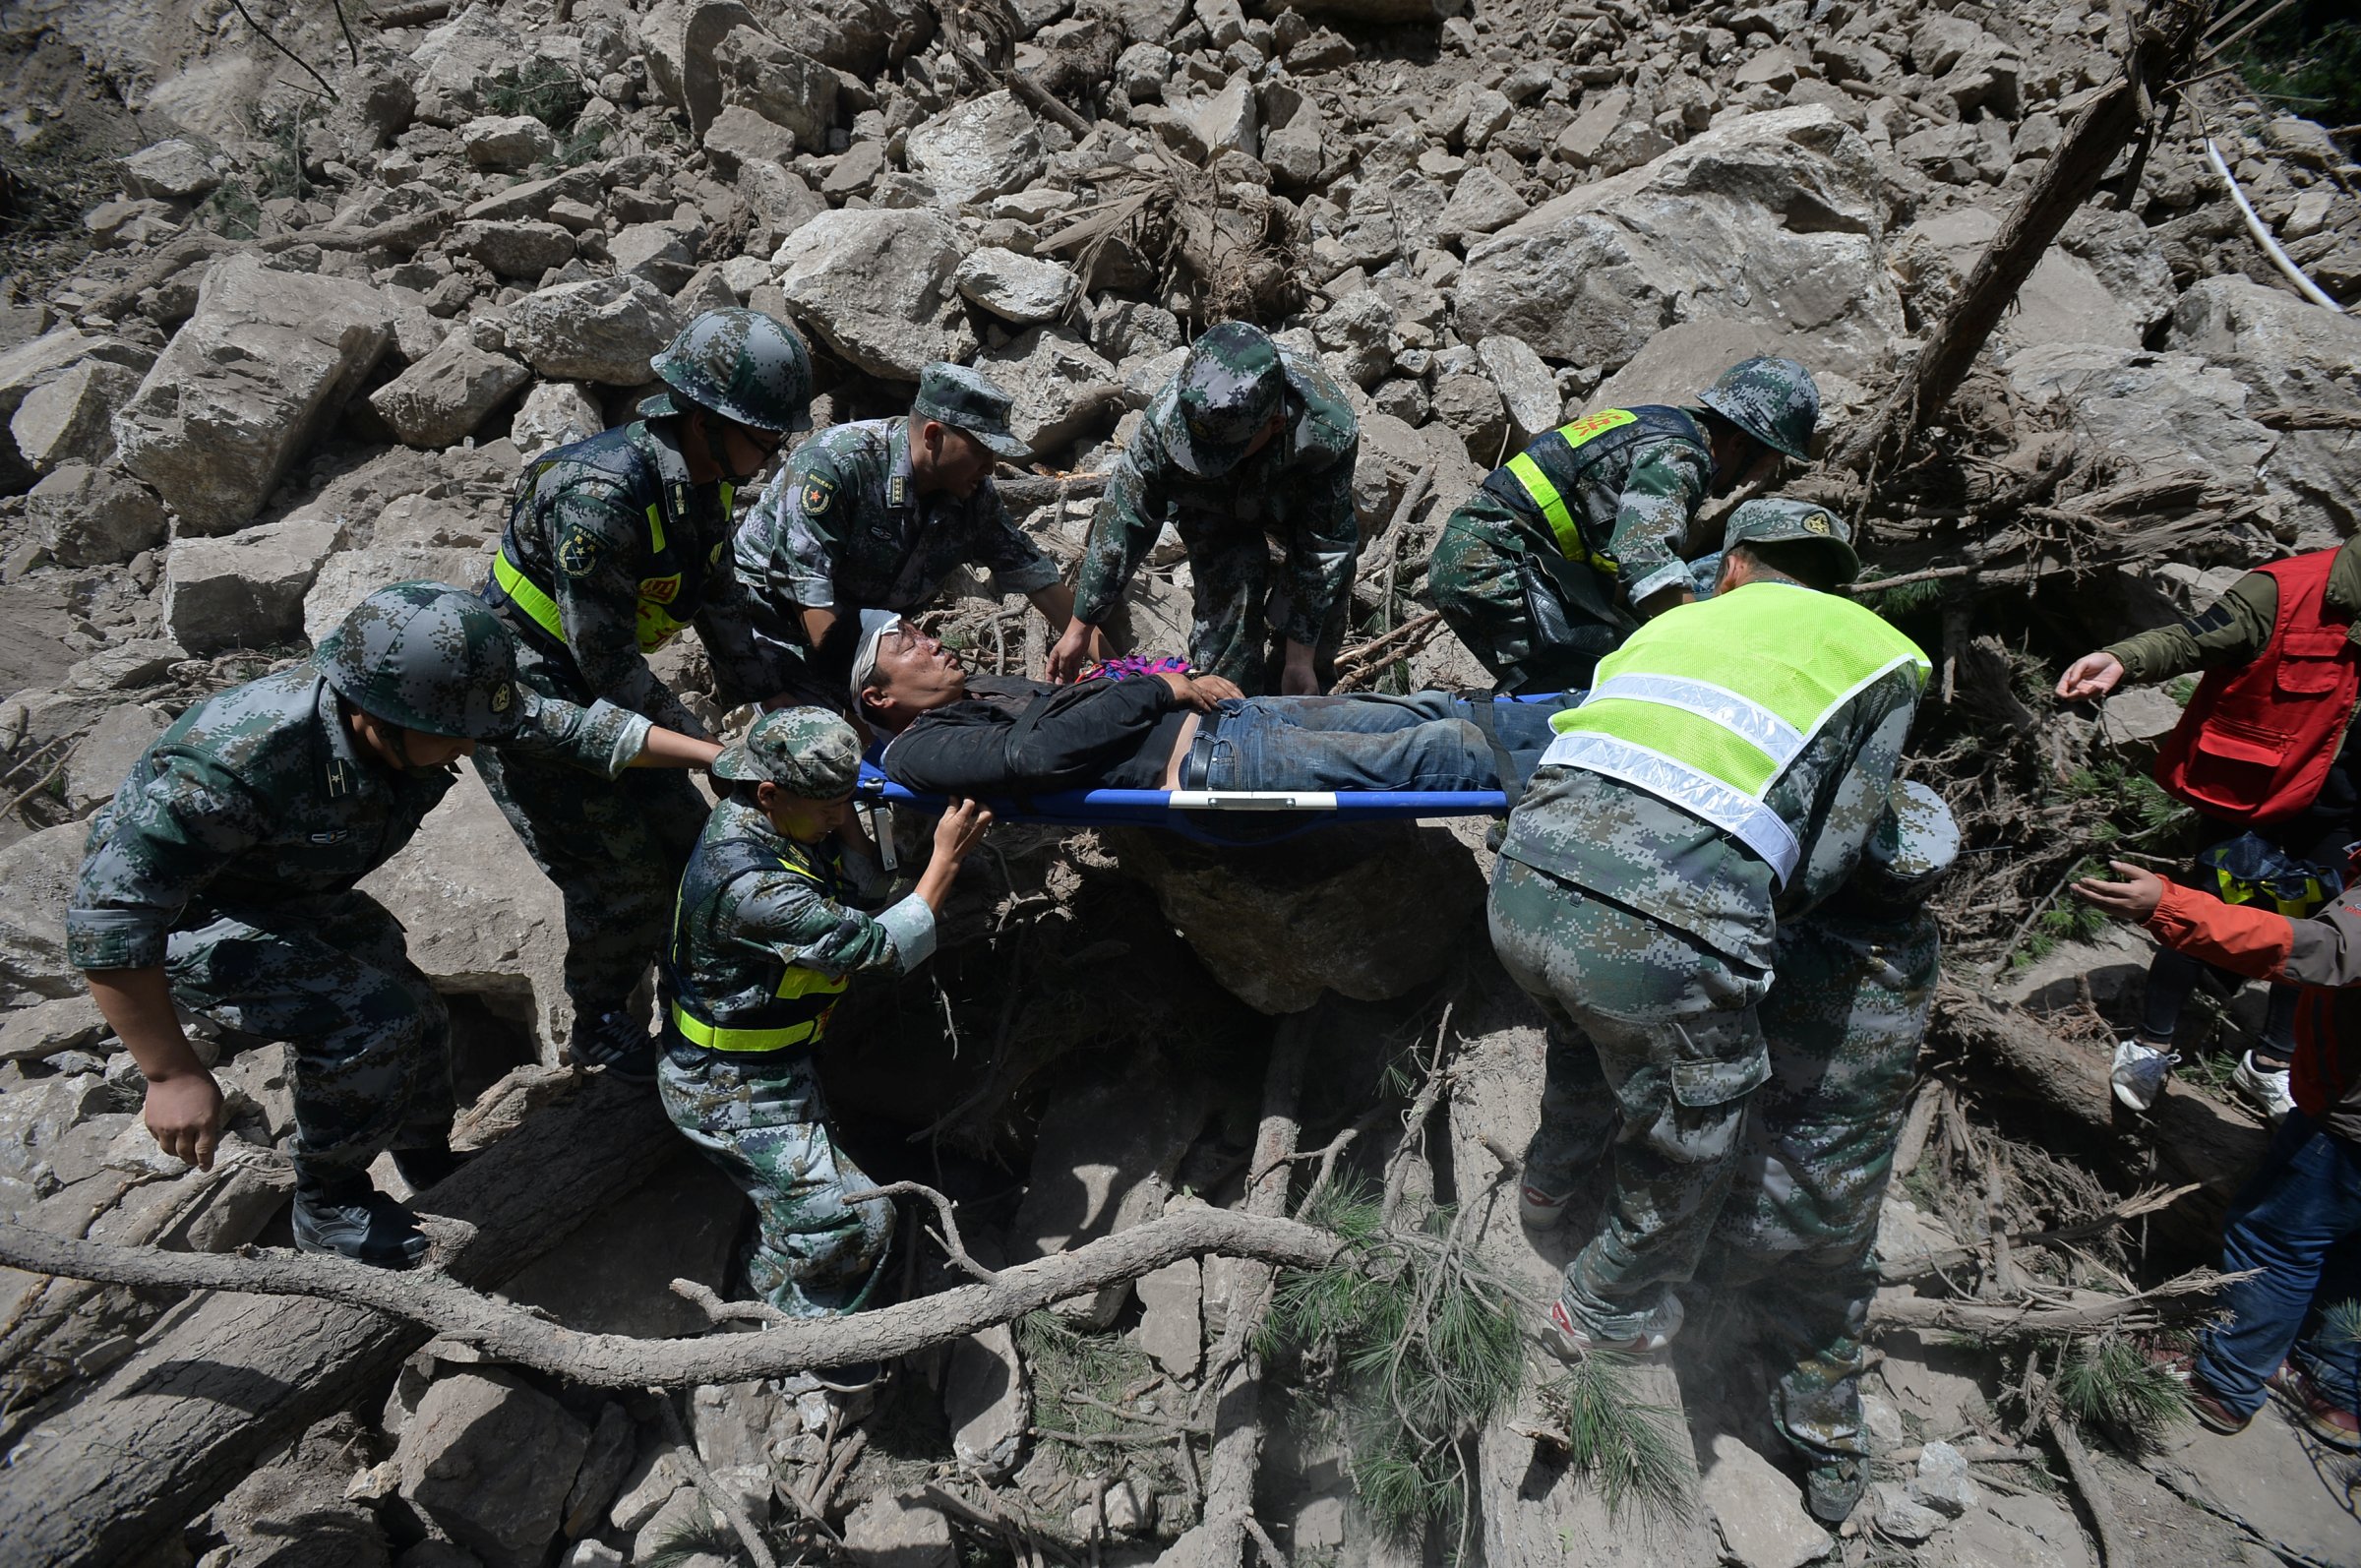 Chinese paramilitary police carry a survivor after an earthquake in Jiuzhaigou county